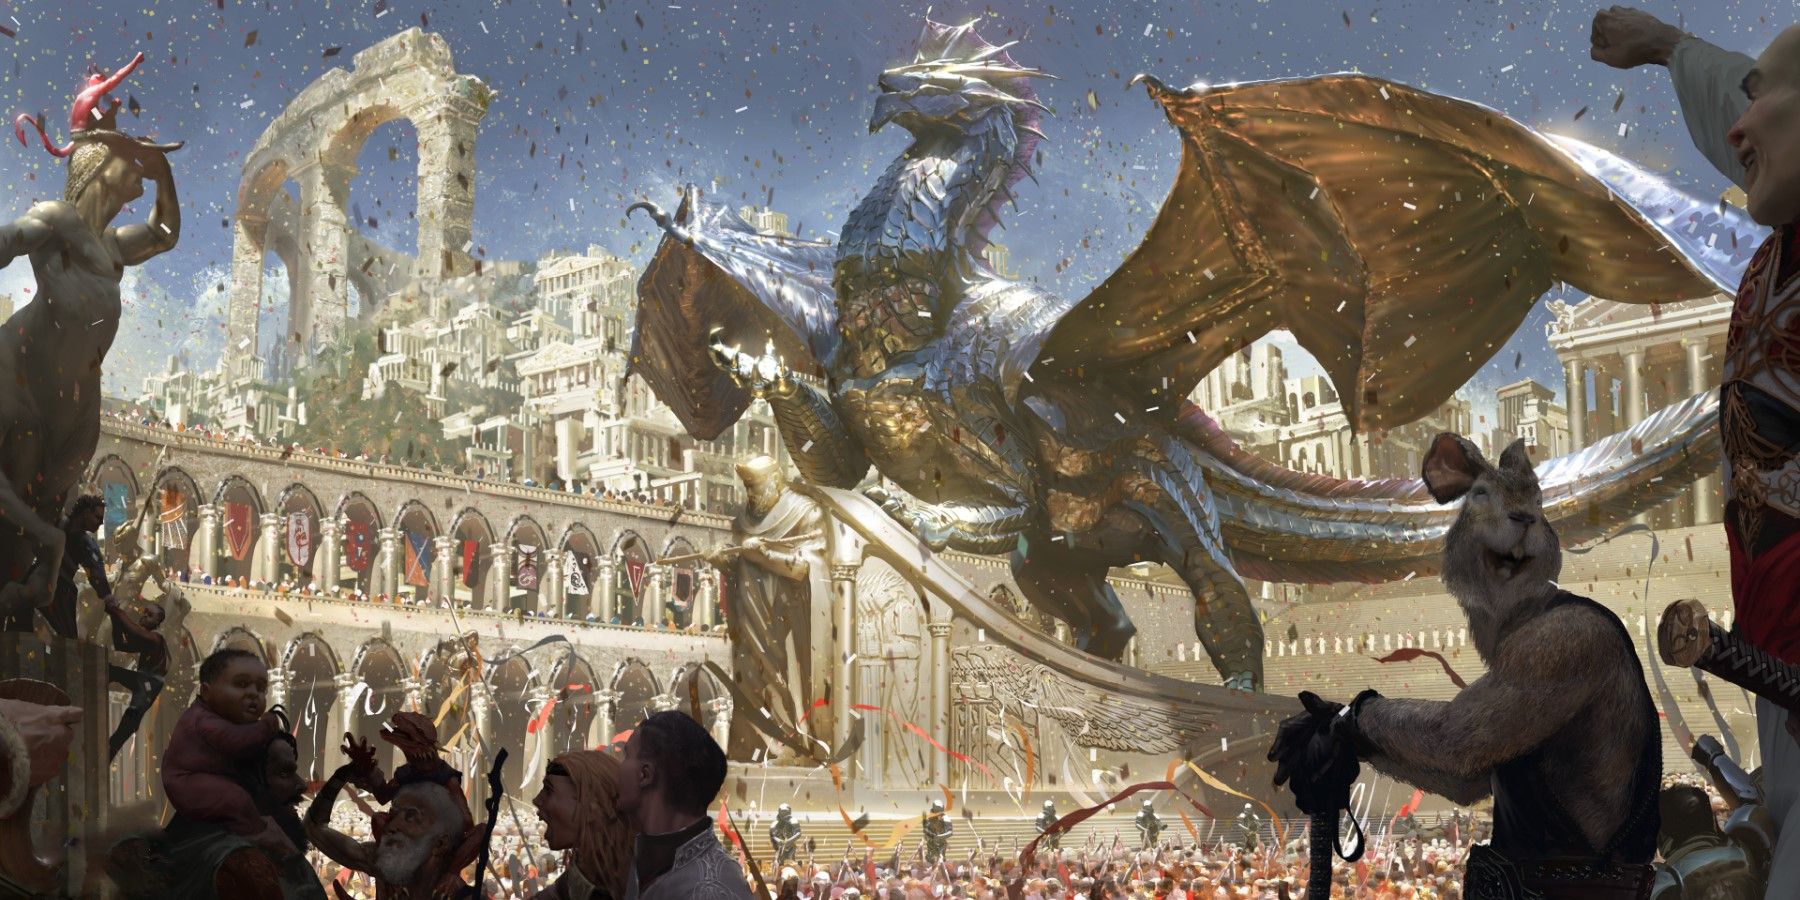 a silver dragon flying over a parading fantasy city